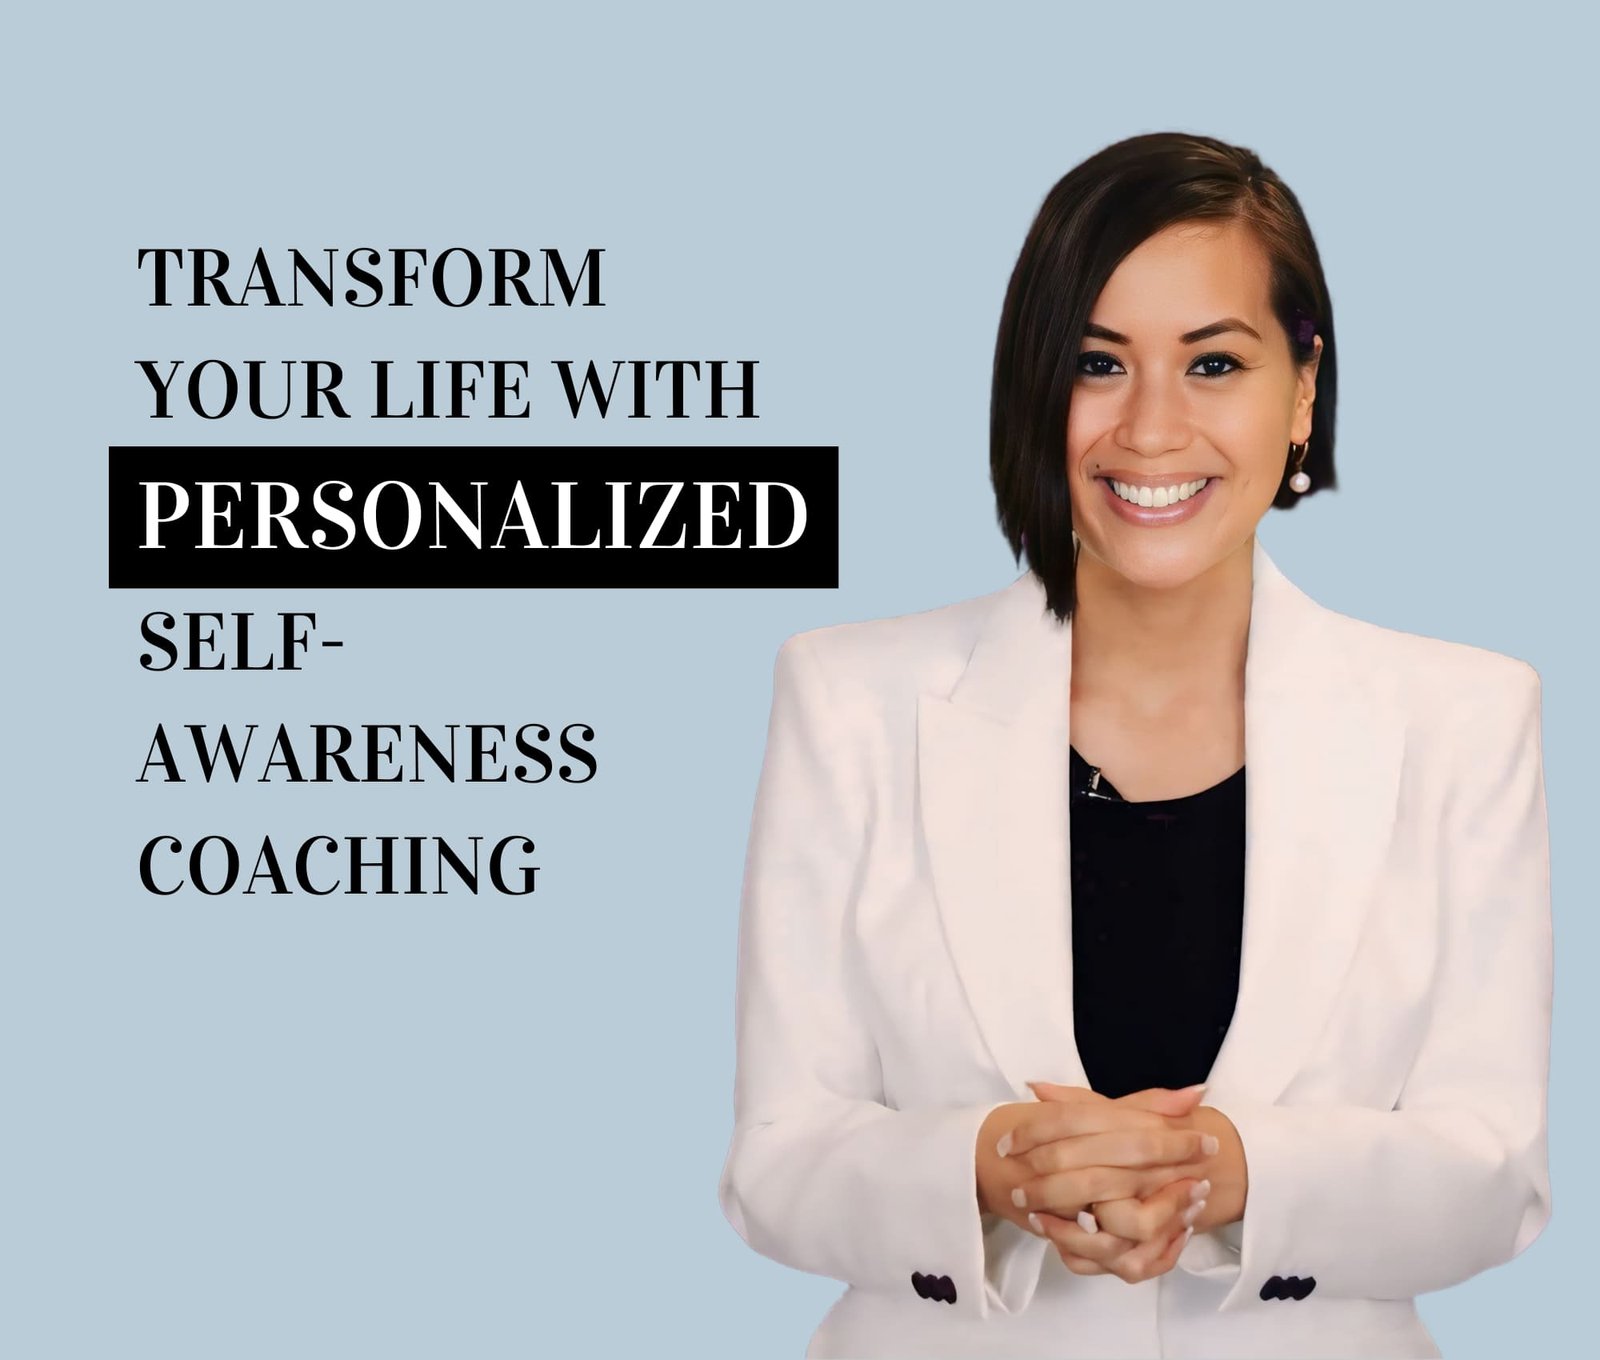 Personalized Self-Awareness Coaching